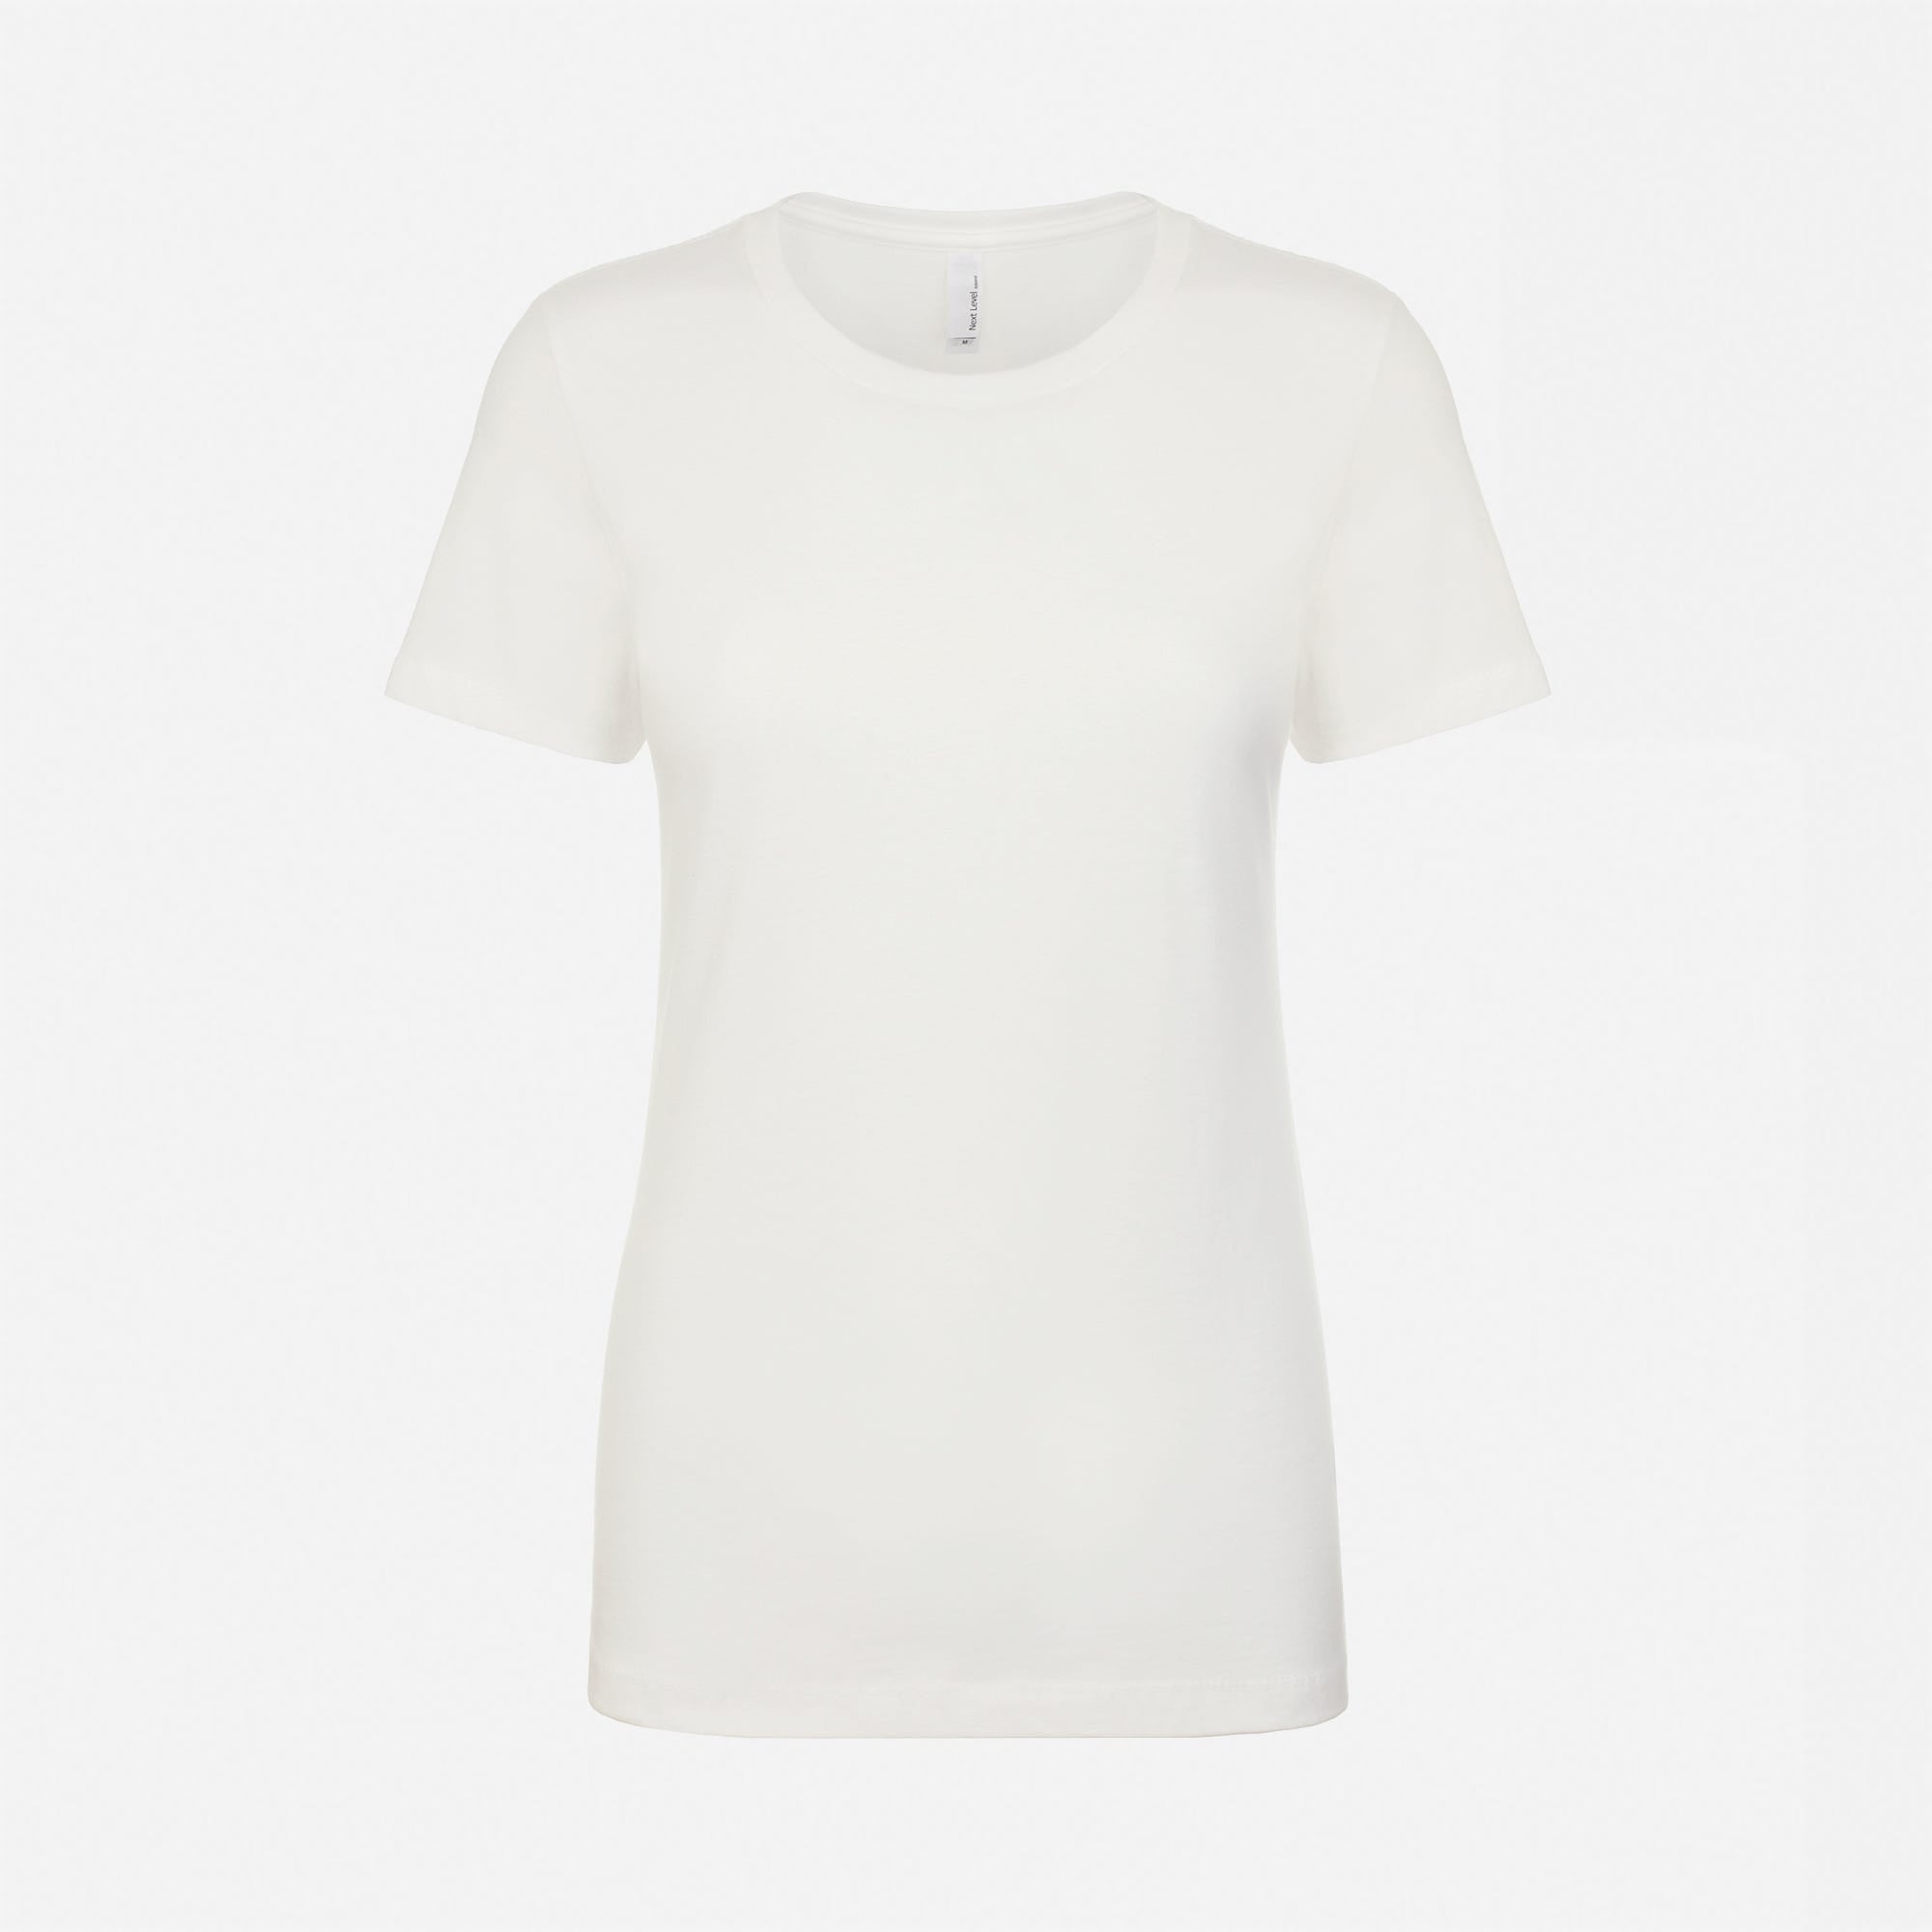 Cotton Boyfriend T-Shirt White 3900 Next Level Apparel Women's Size Front View